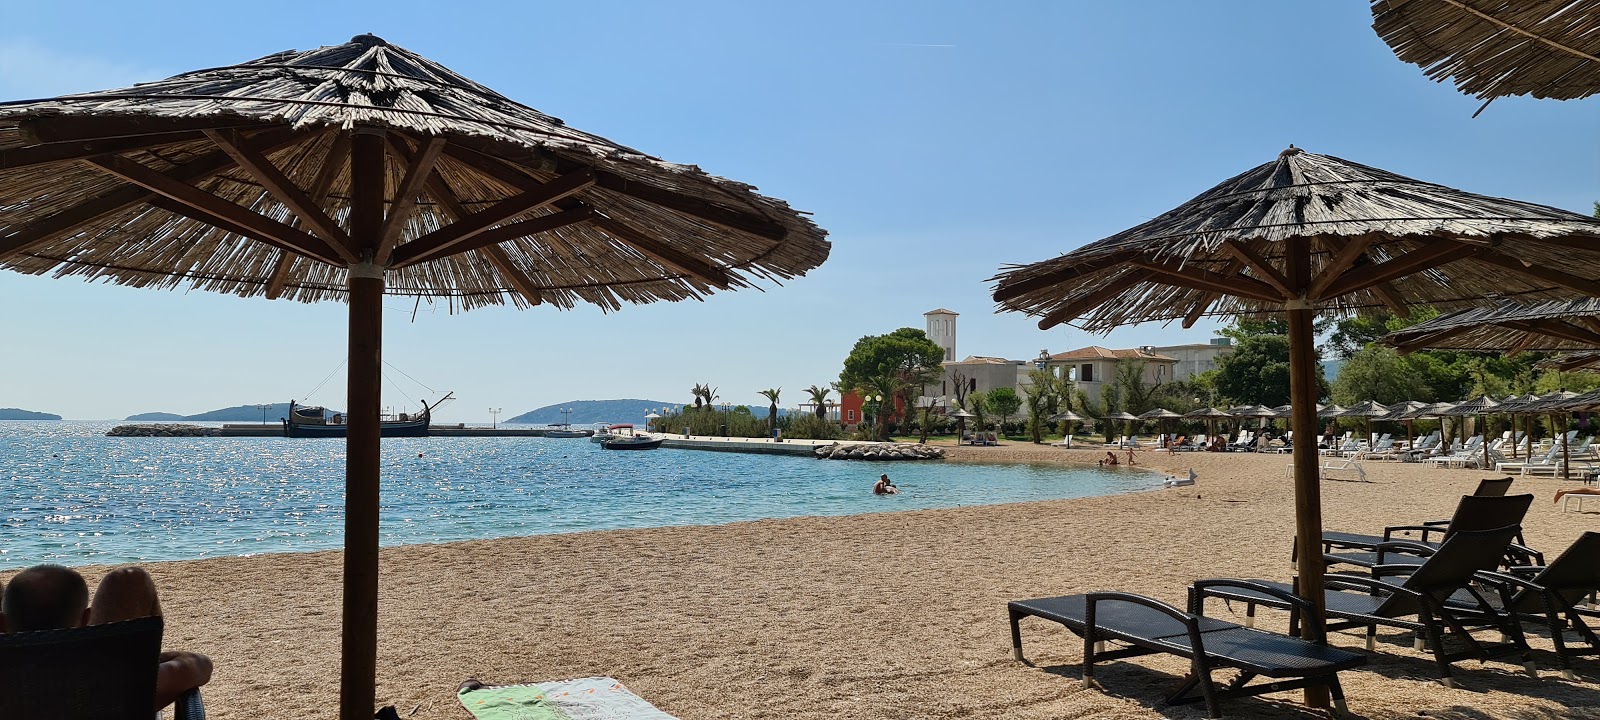 Photo of Solaris beach beach resort area